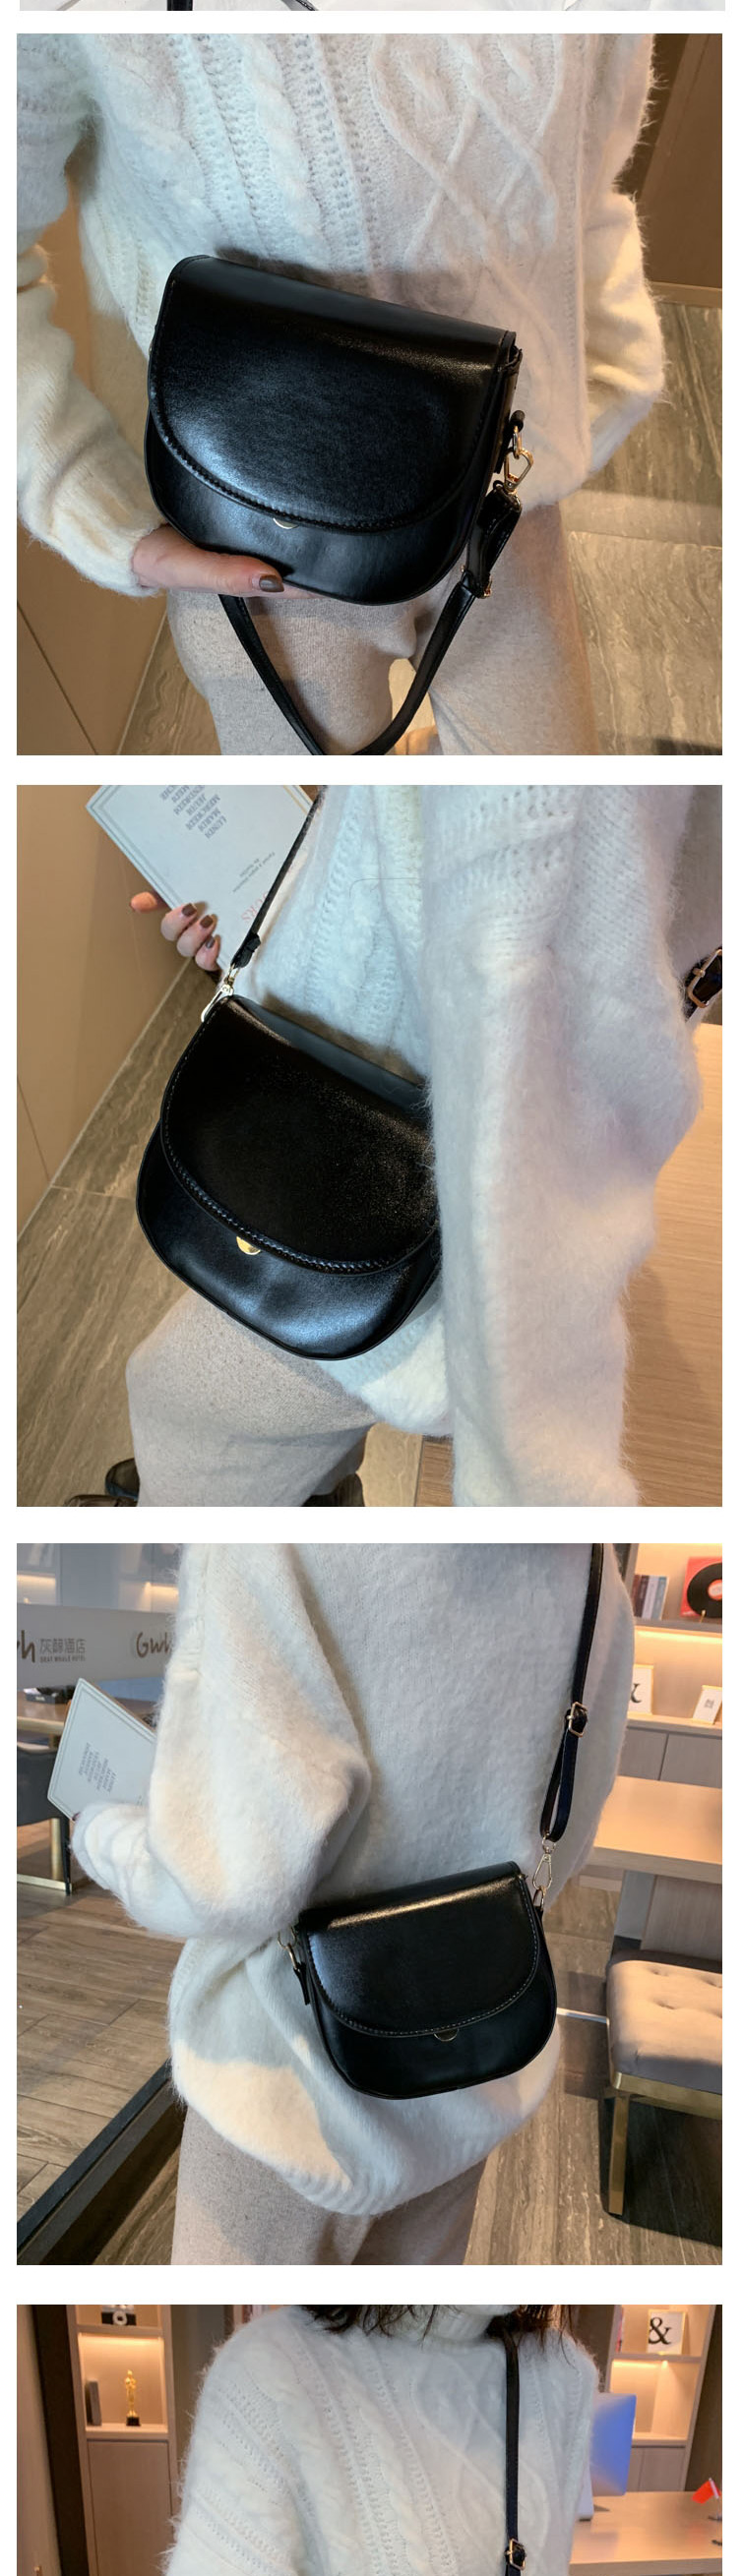 Fashion Red Semi-flap Flap Lock Shoulder Crossbody Bag,Shoulder bags